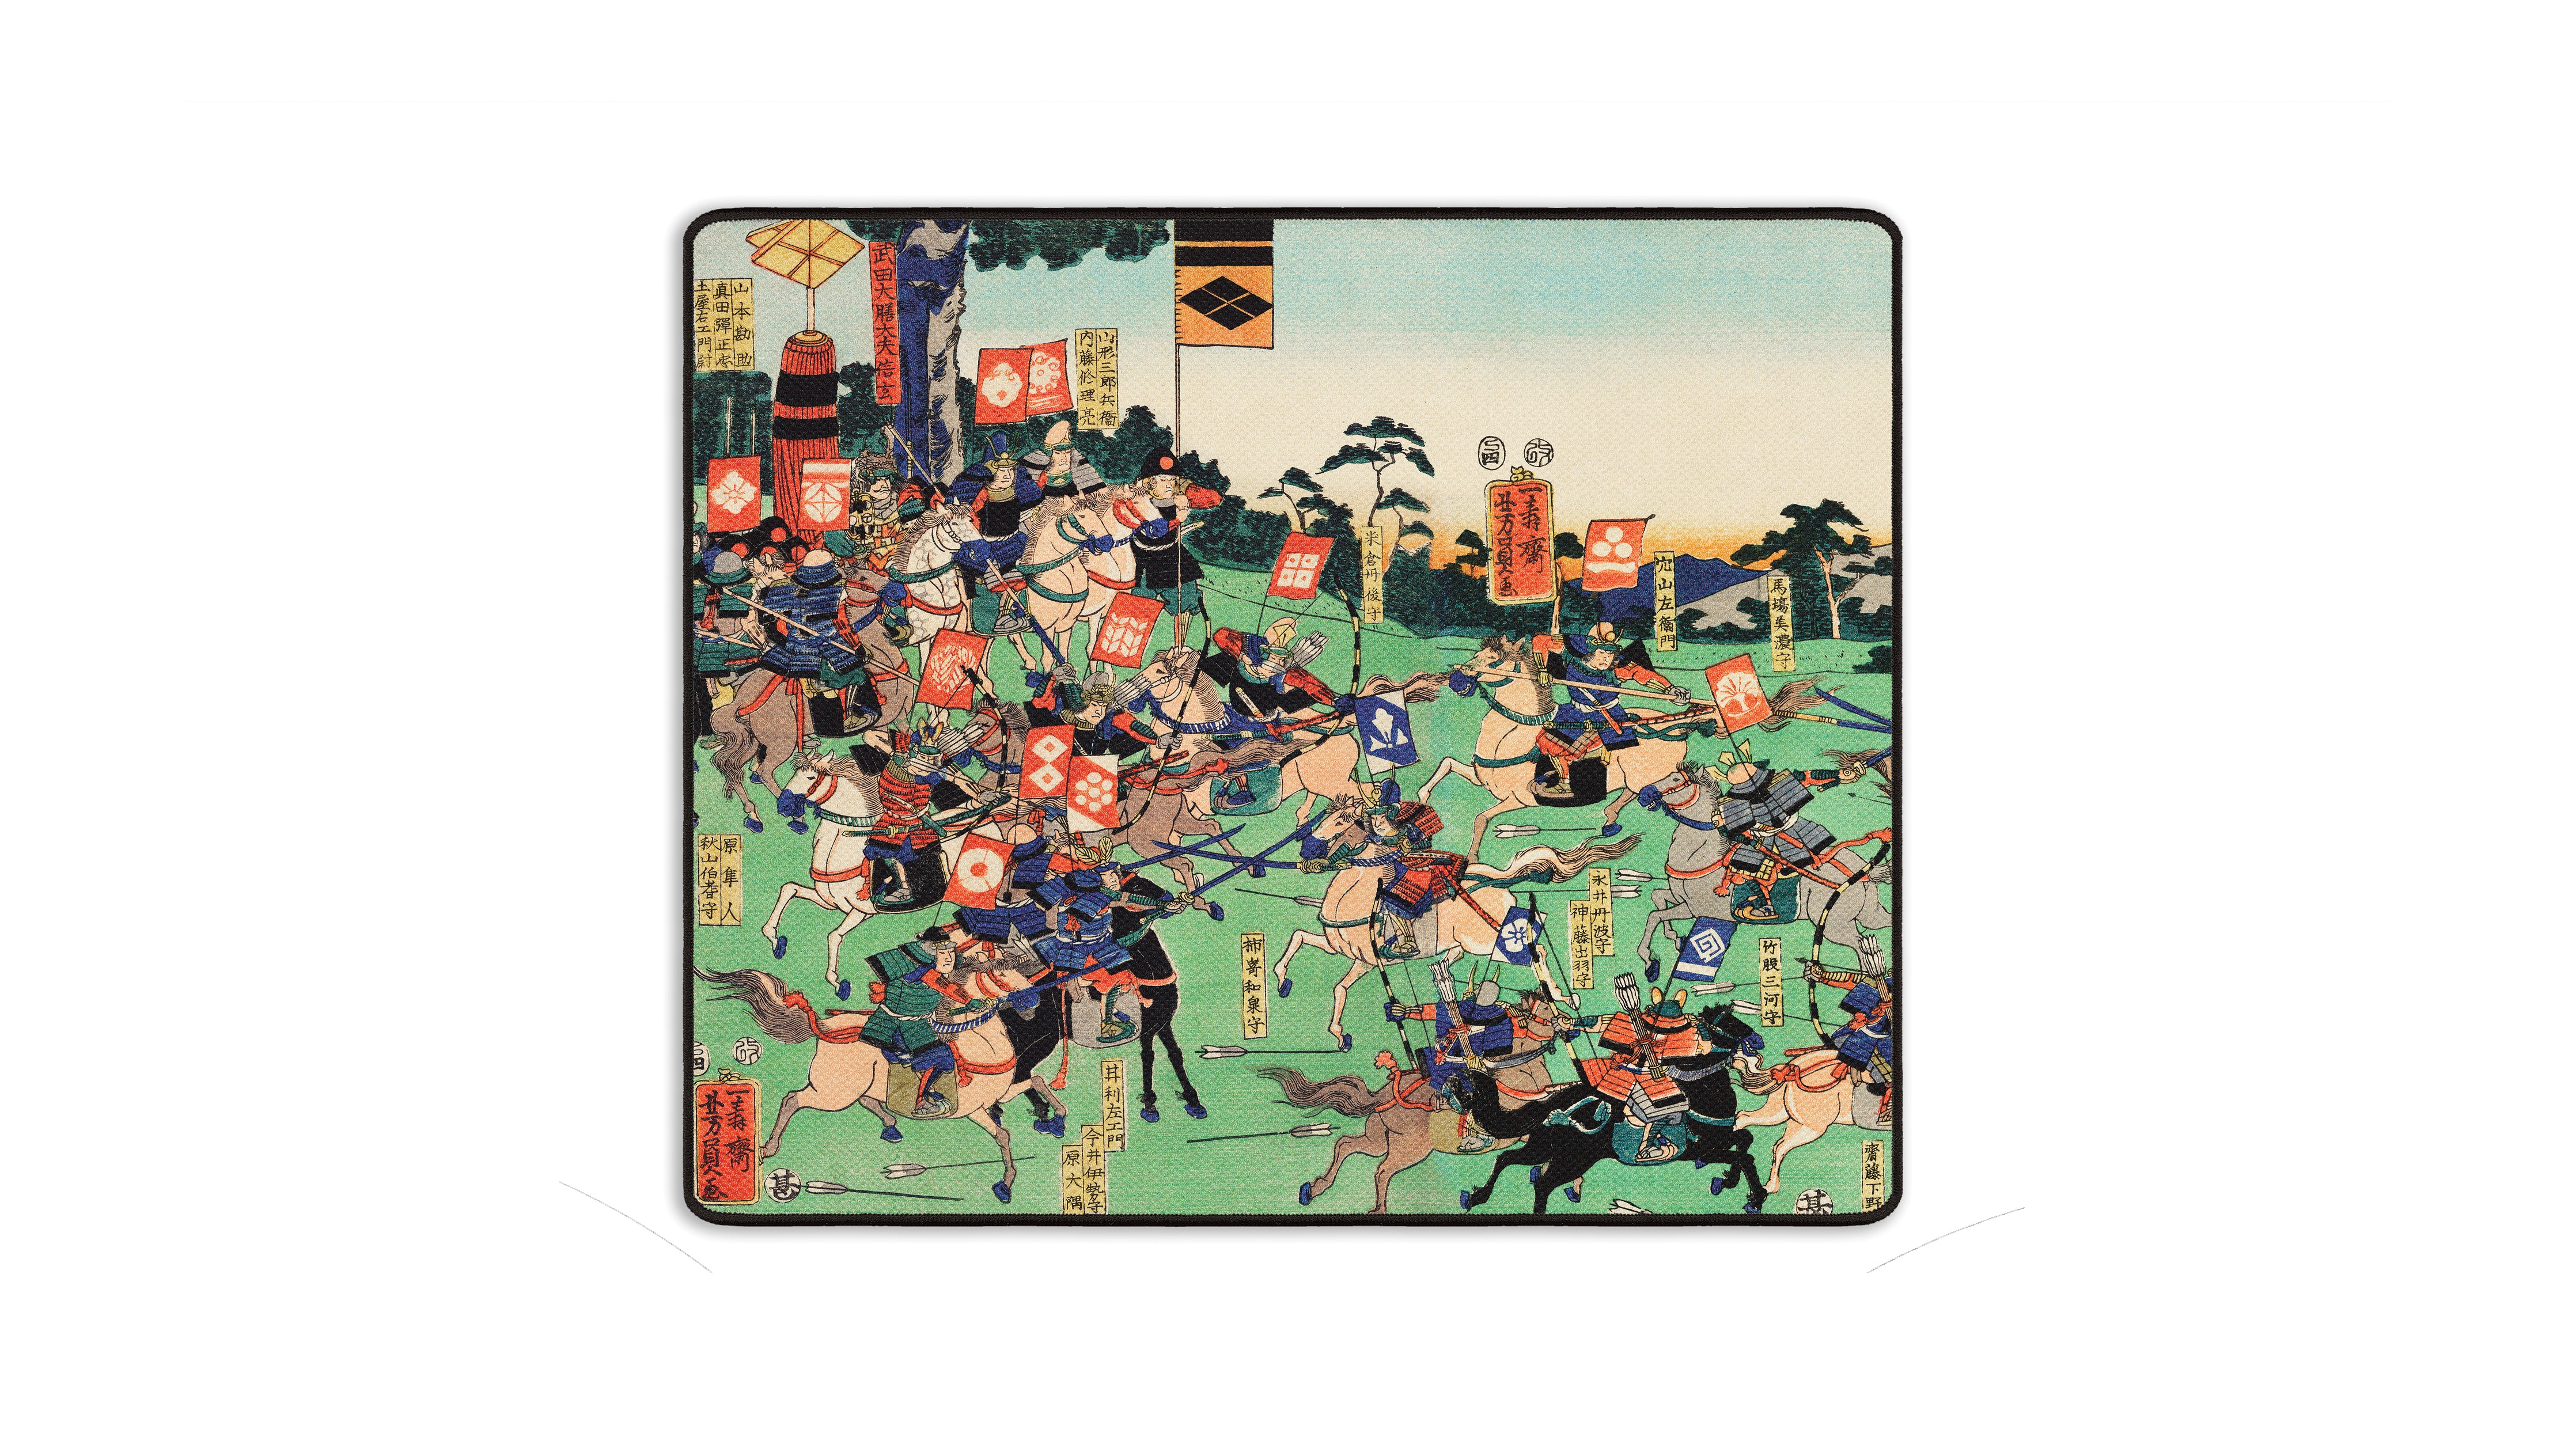 Kawanakajima no kassen by Utagawa Kuniyoshi (1798-1861) - The Mousepad Company